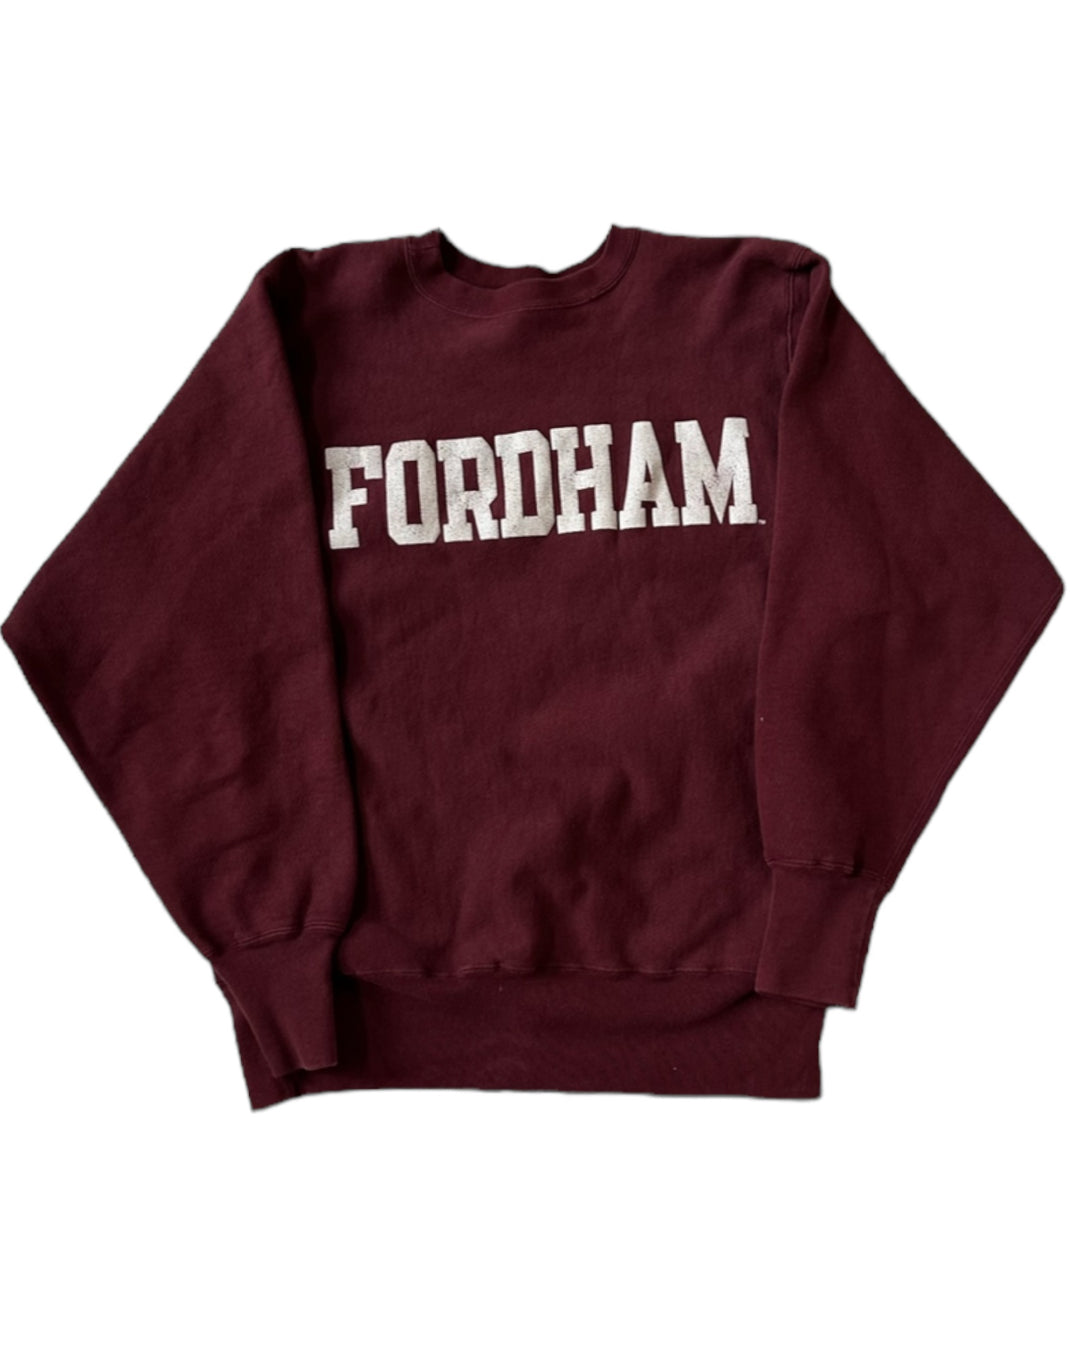 Fordham Vintage Sweatshirt